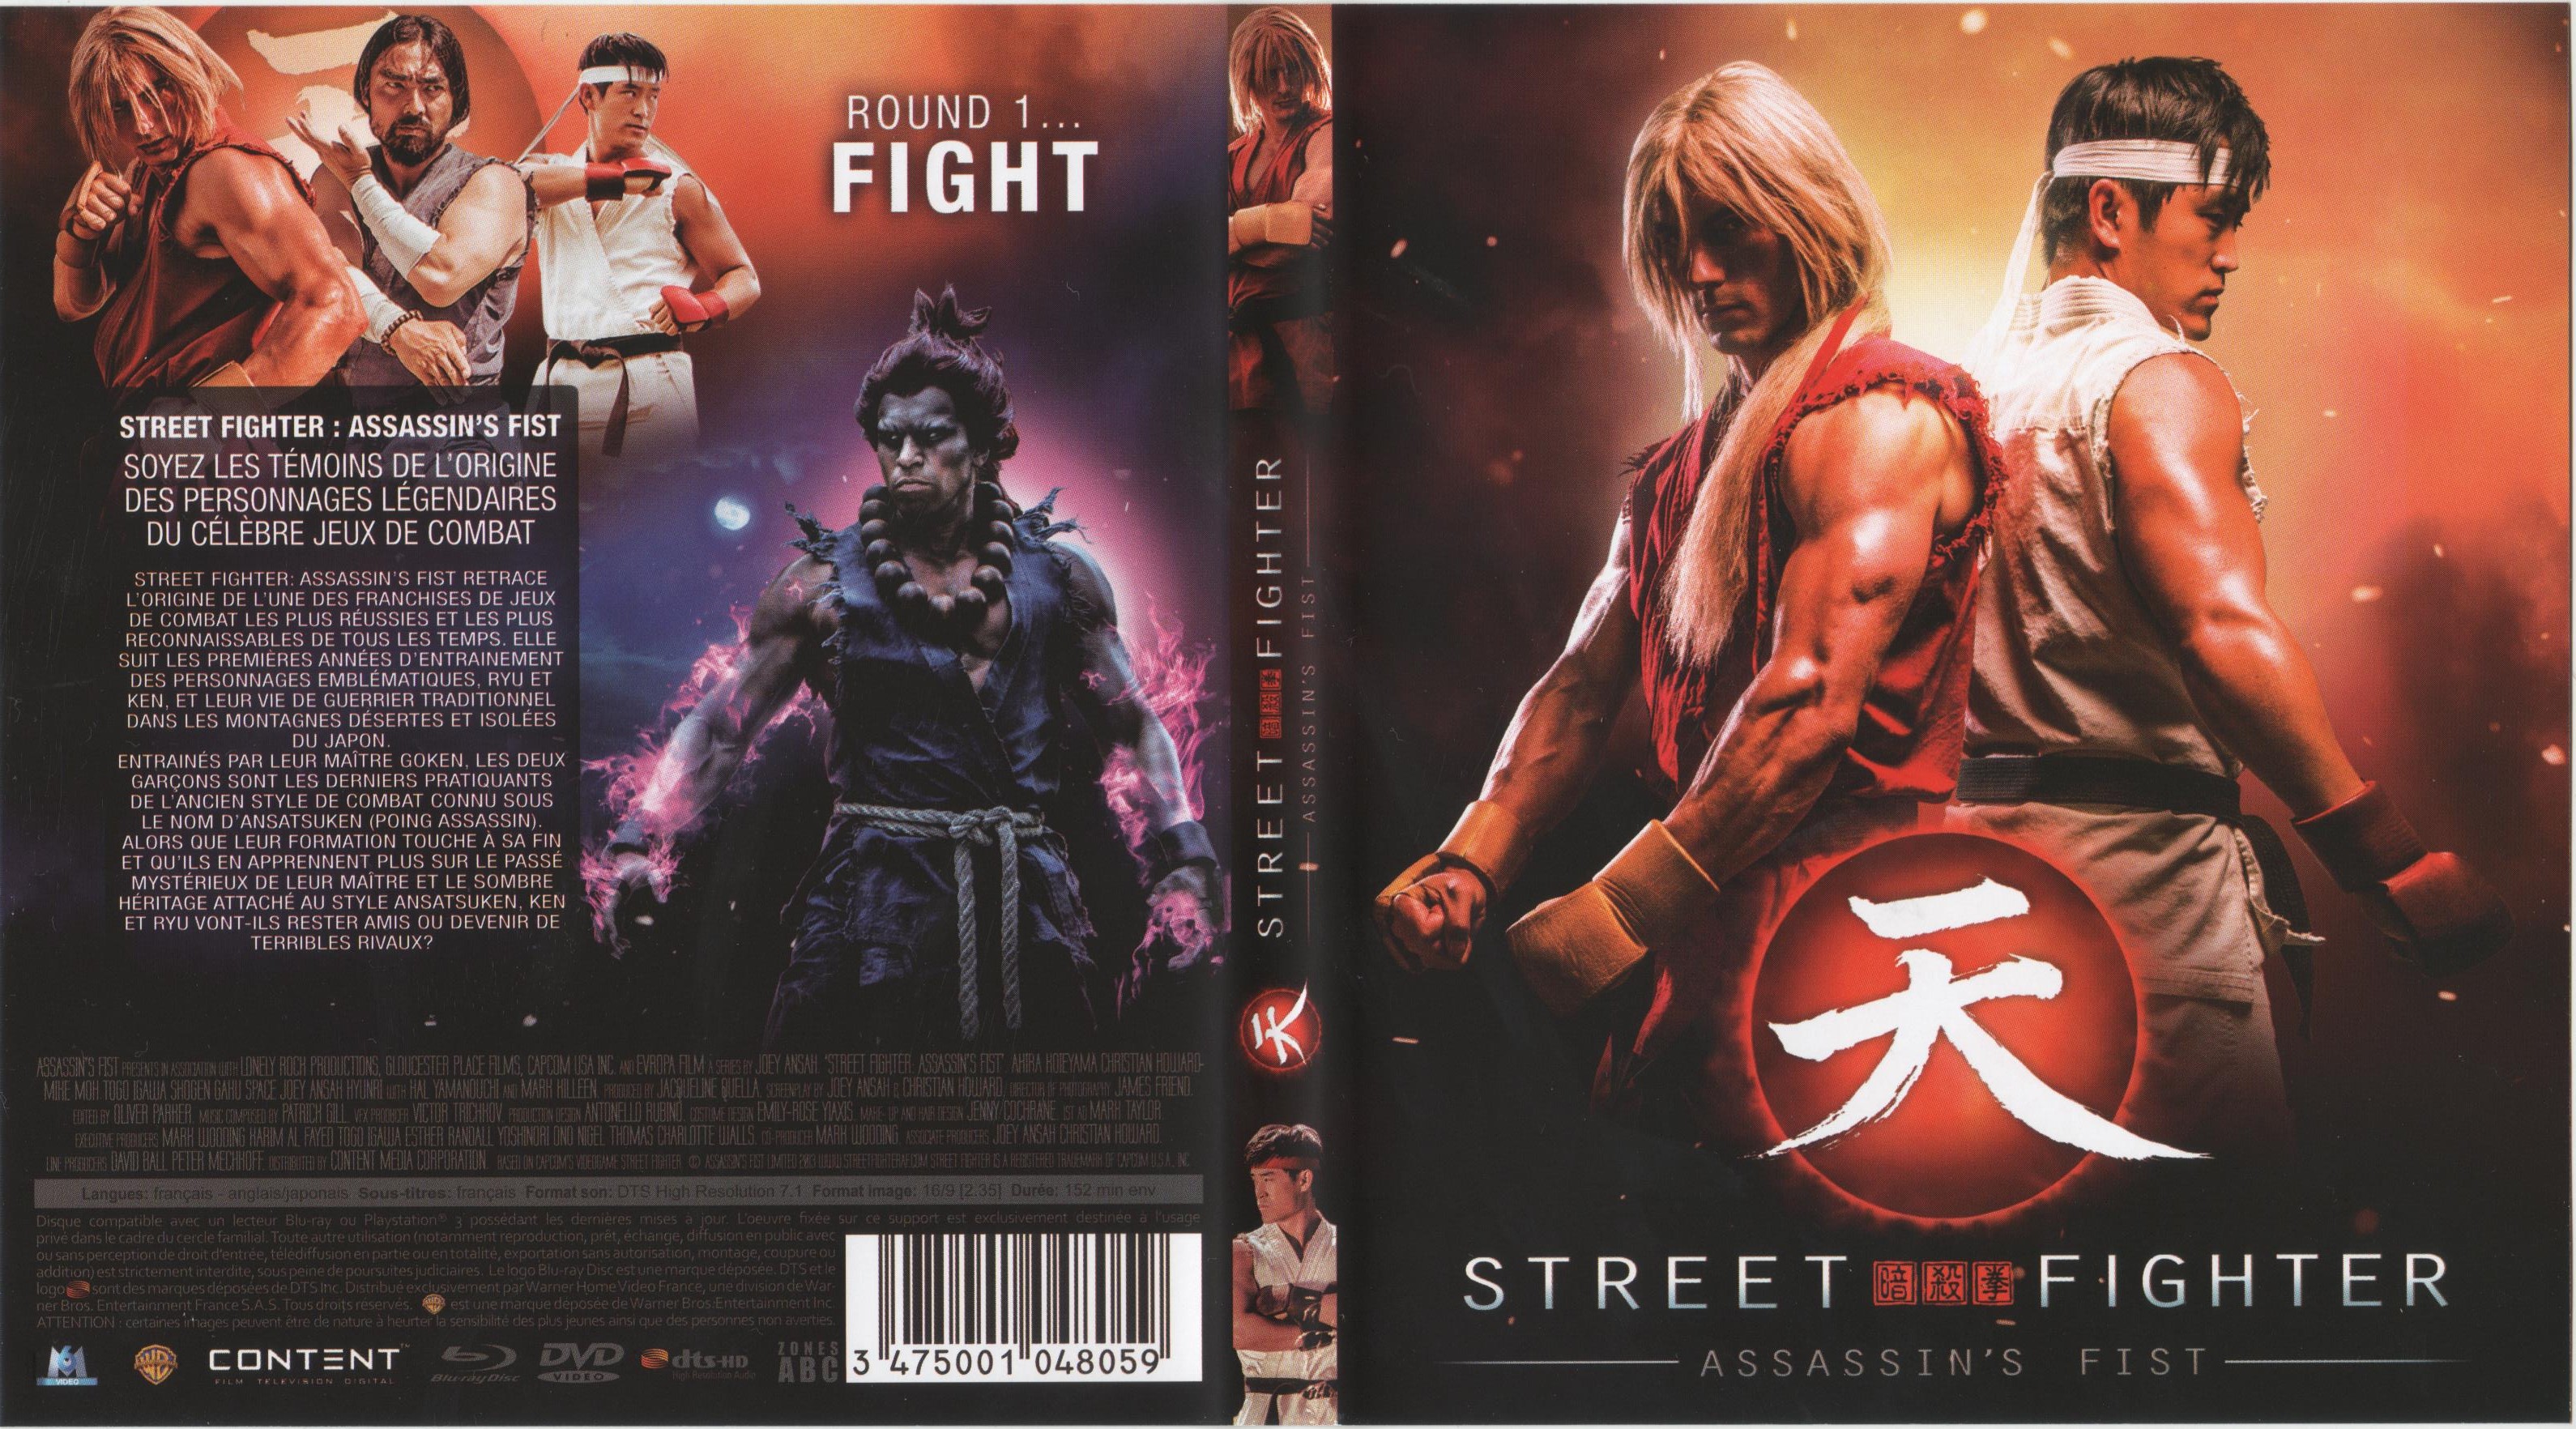 Jaquette DVD Street fighter,assassin-s fist-BLU RAY